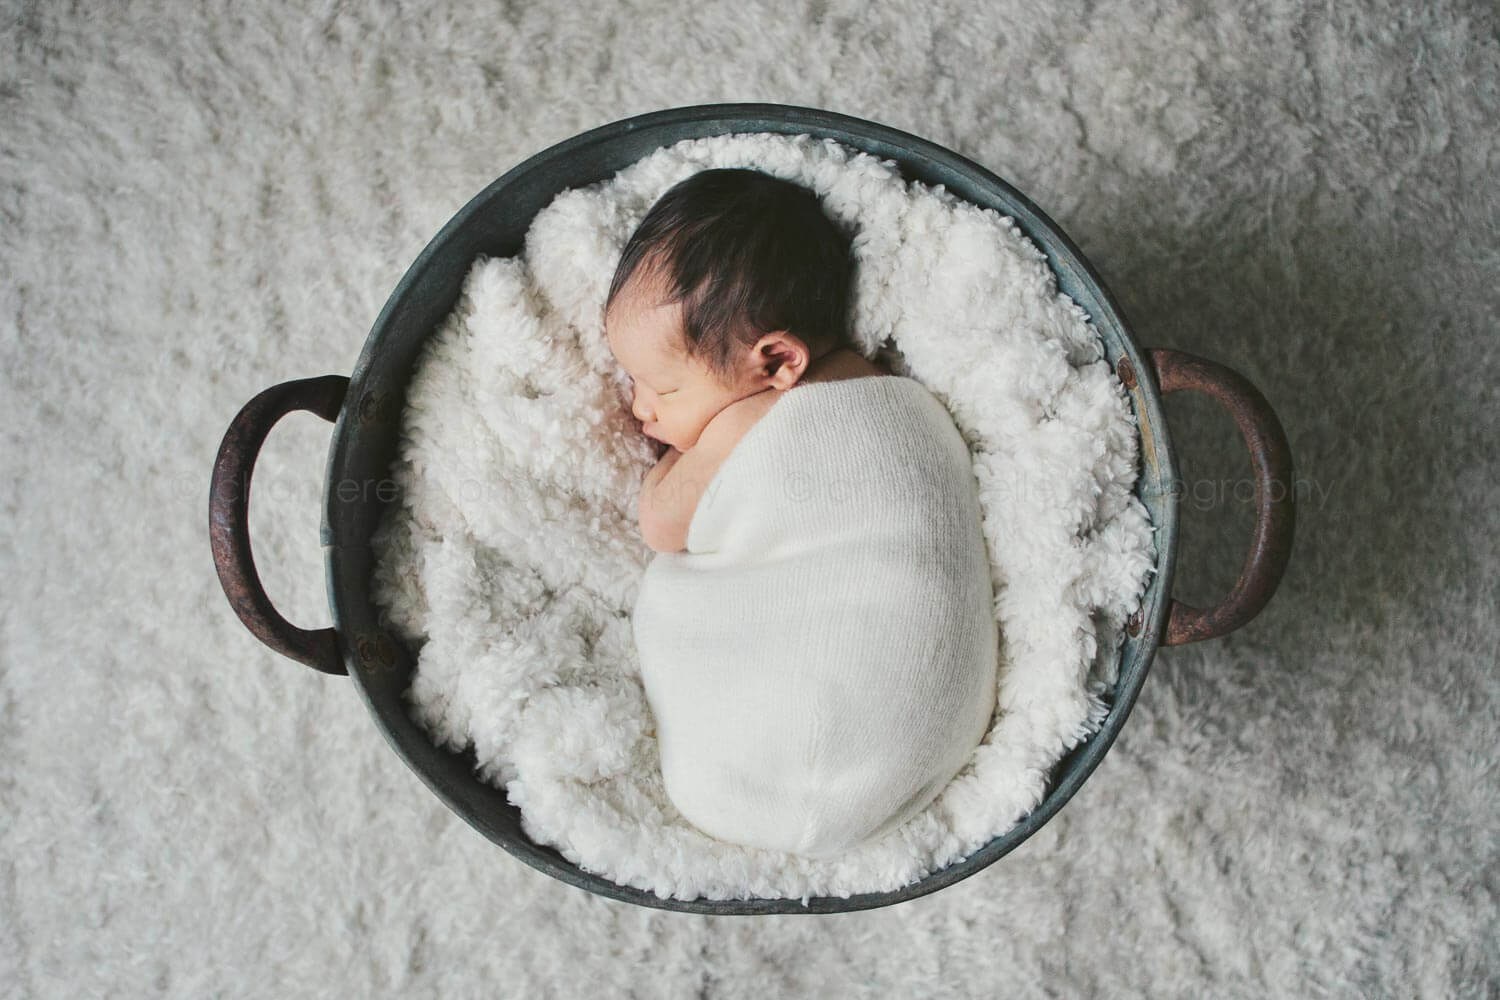 newborn baby swaddled in bucket